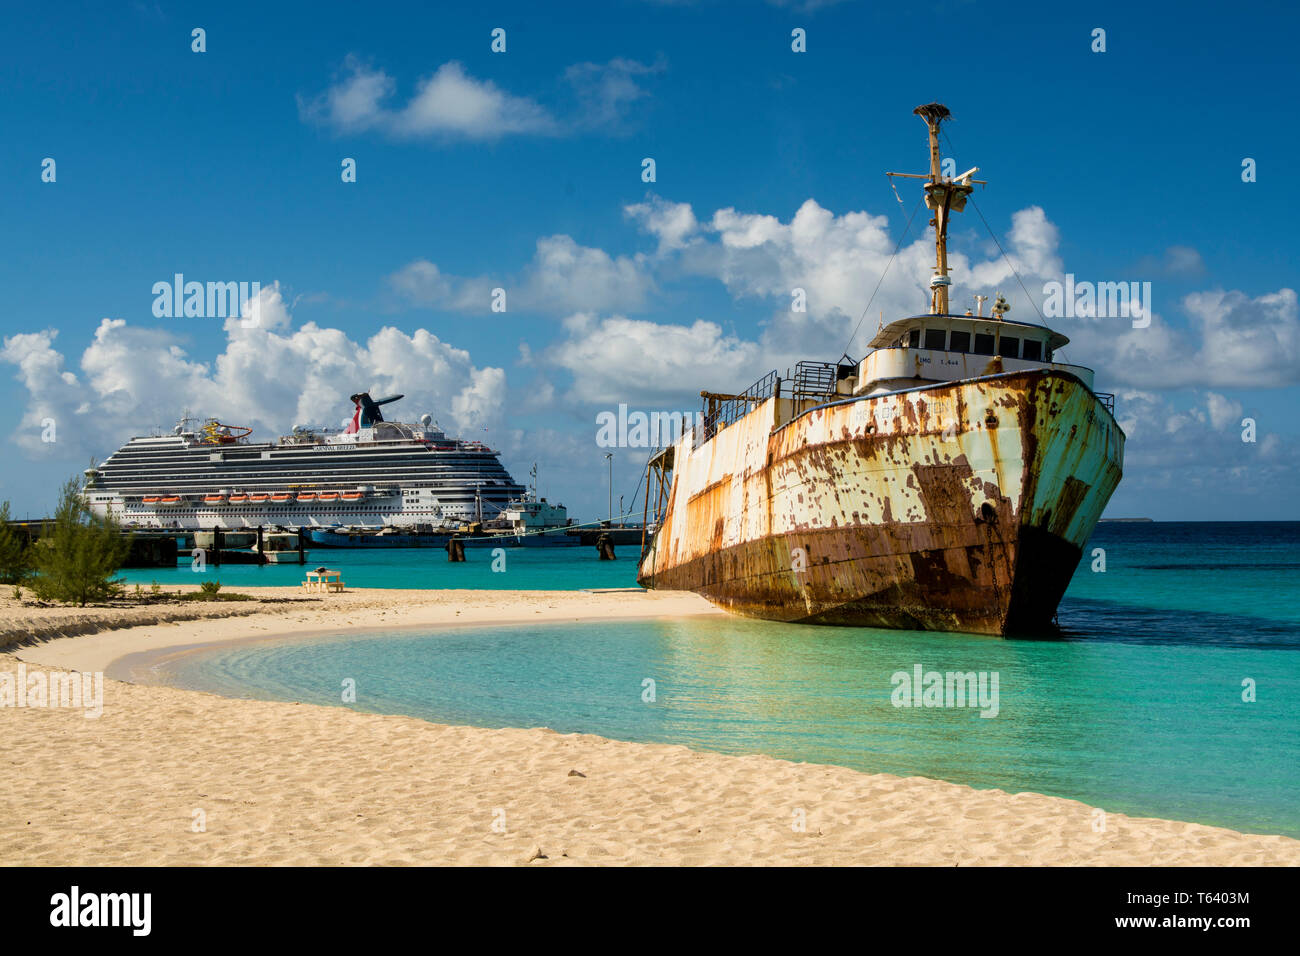 Mega One Triton shipwreck, Governor's Beach, Grand Turk Island, Turks and Caicos Islands, Caribbean. Stock Photo